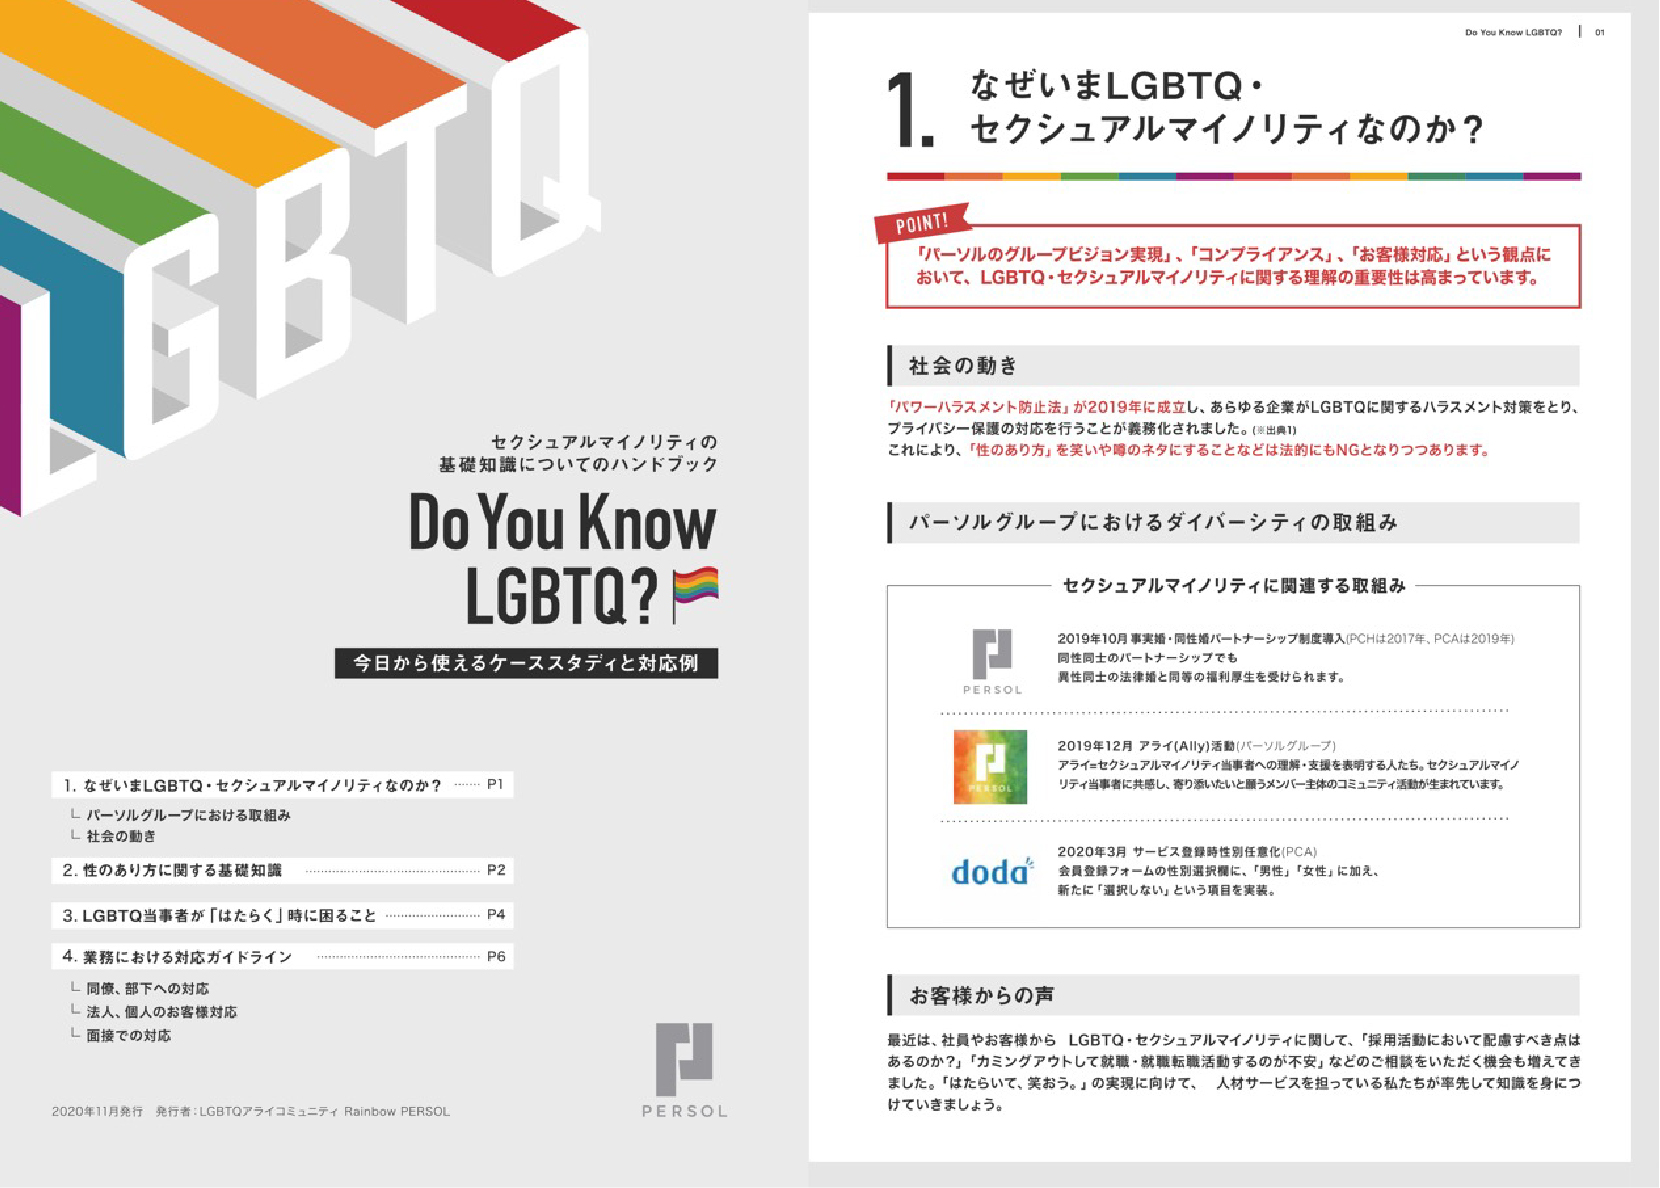 LGBTQに関する基礎知識ガイドブック「Do You Know LGBTQ？」